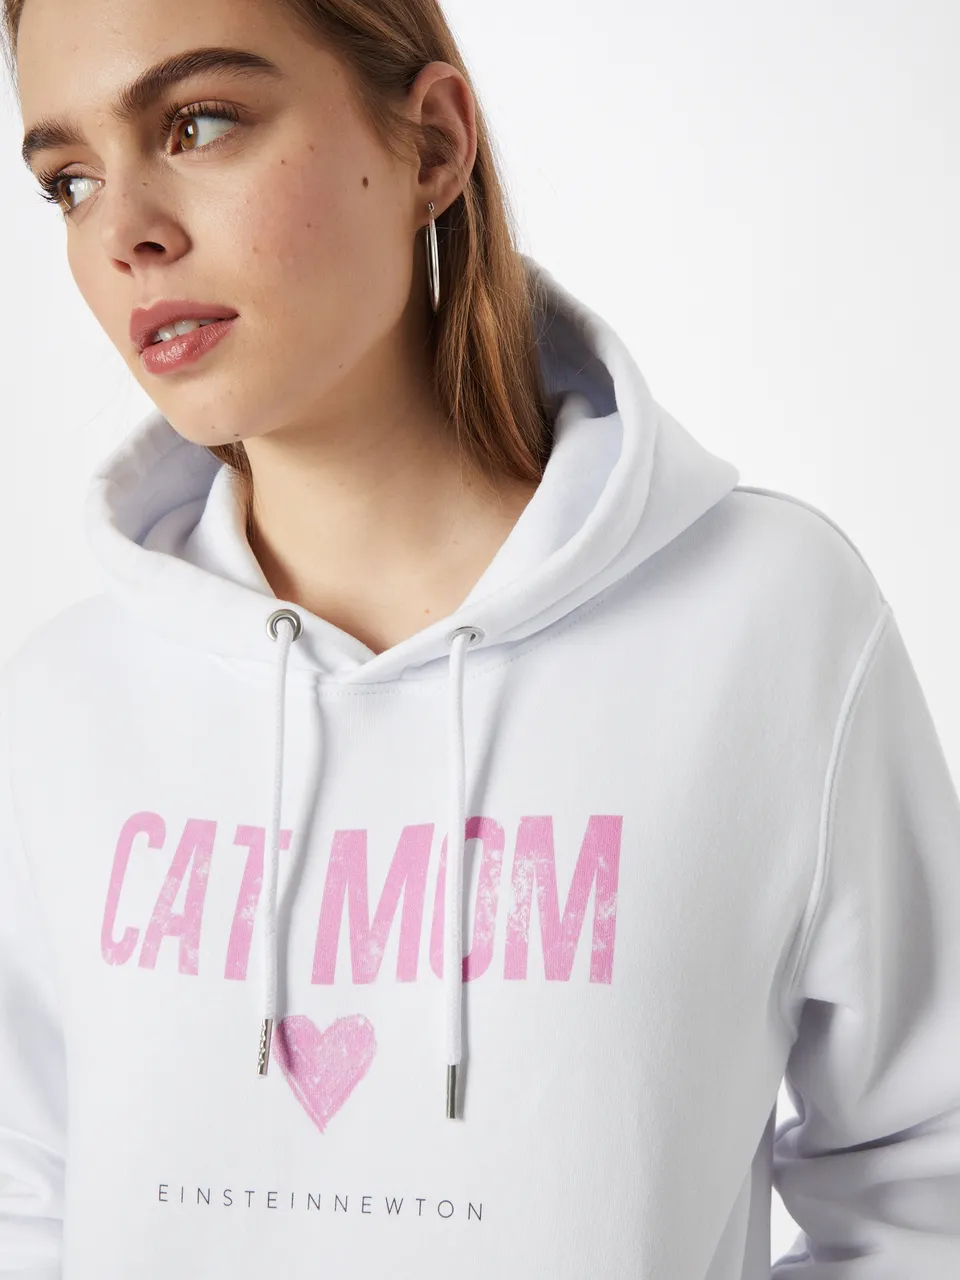 Sweatshirt 'Cat Mom'